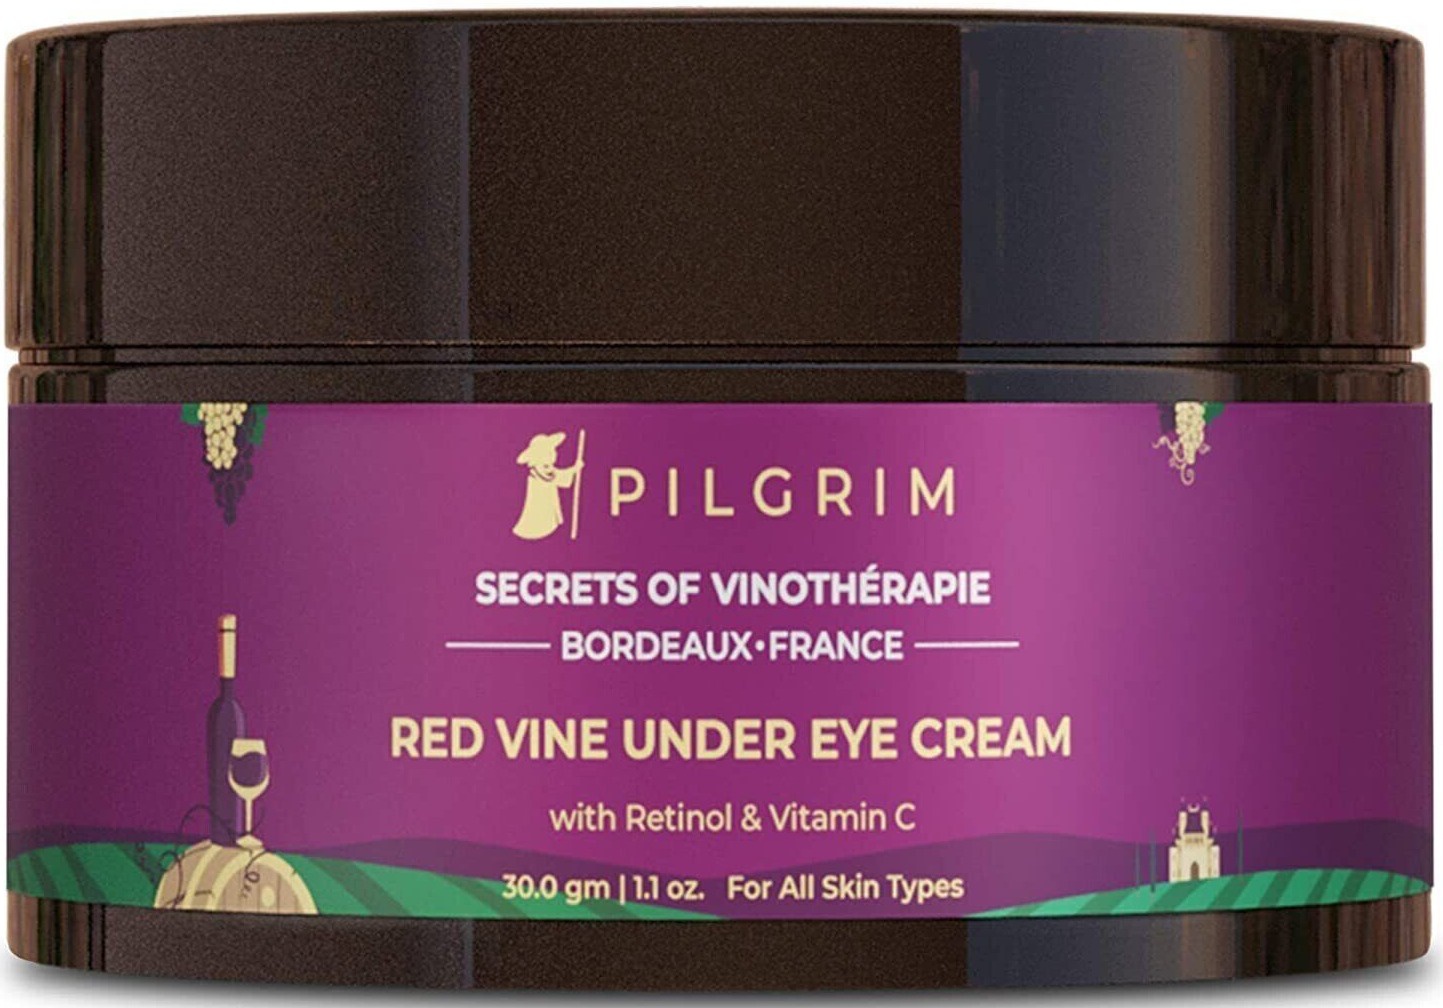 Pilgrim Red Vine Under Eye Cream With Retinol & Vitamin C